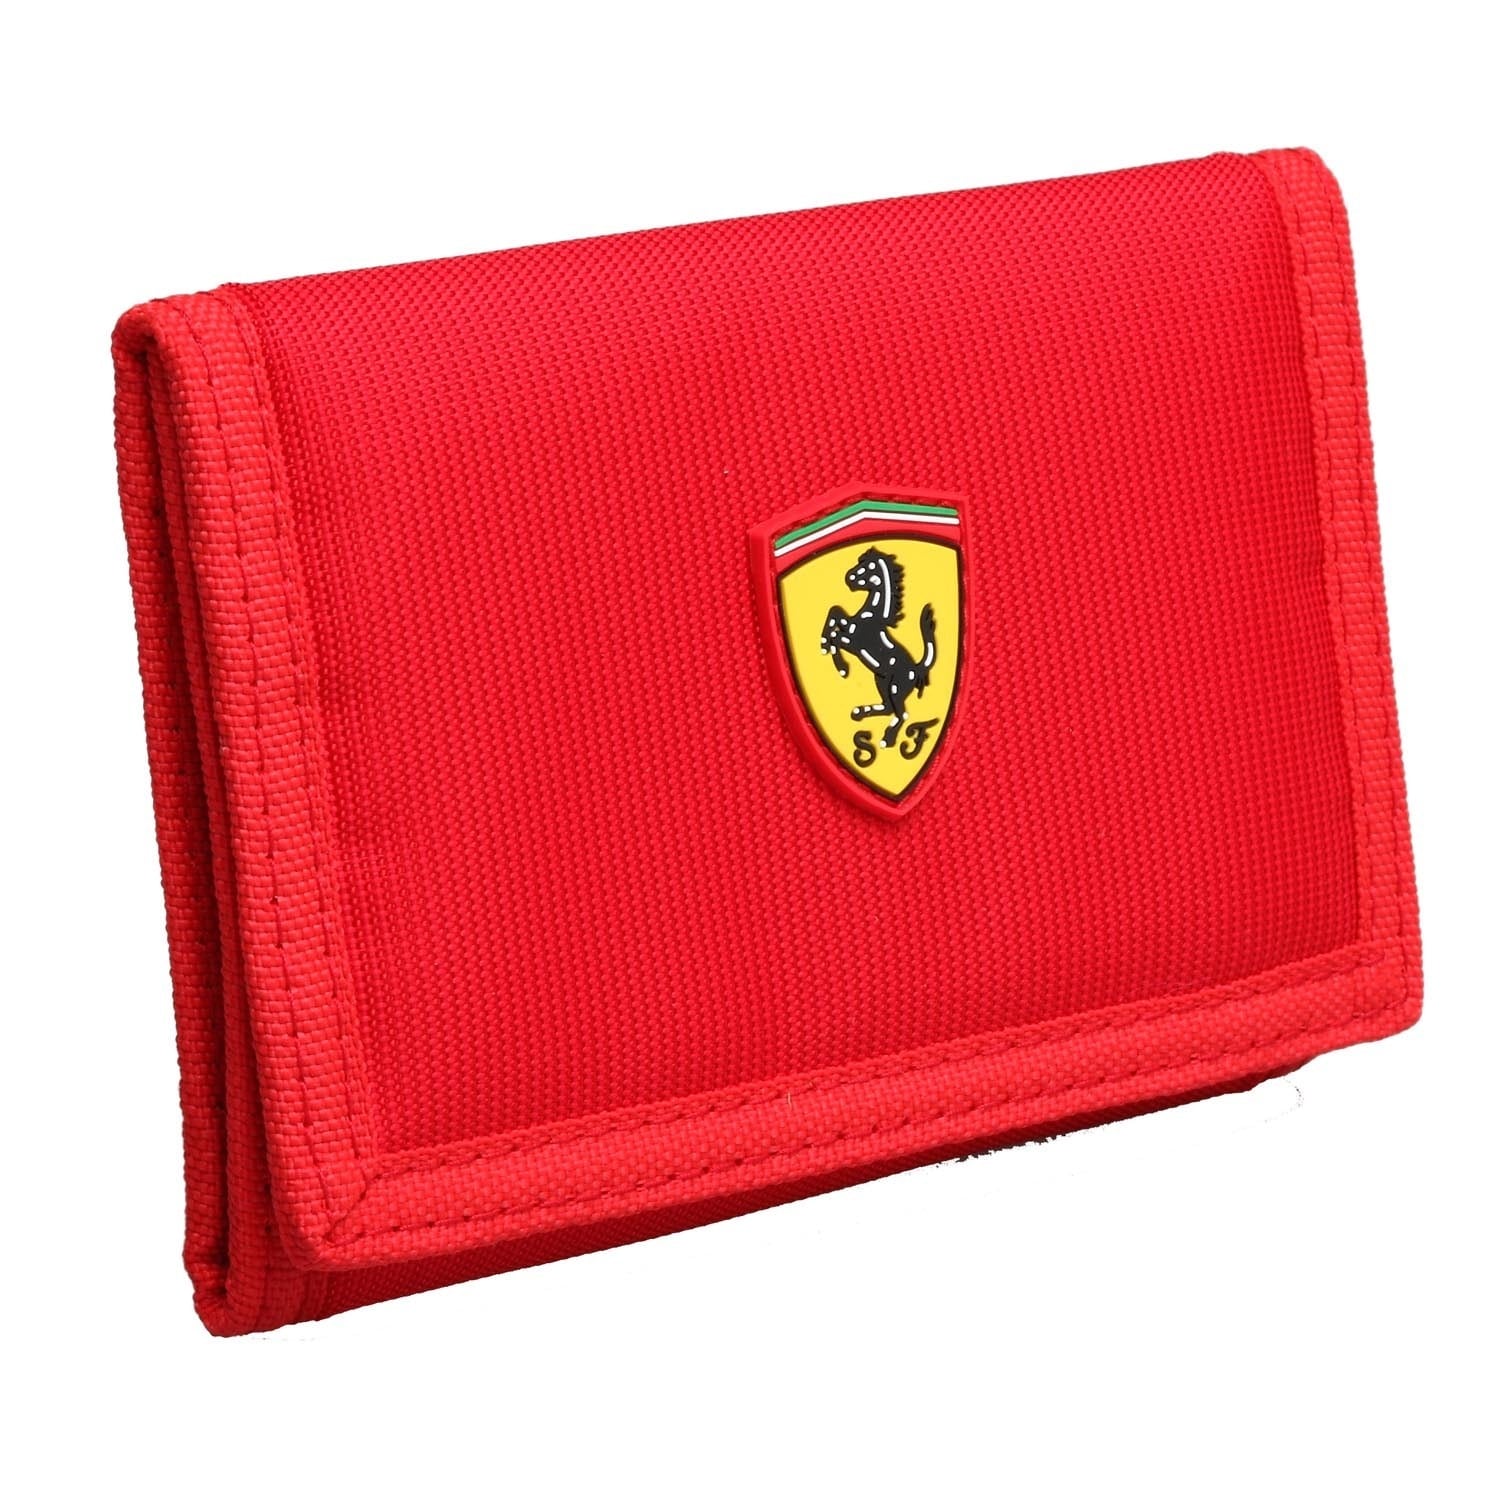 Ferrari Red Keyholder Wallet